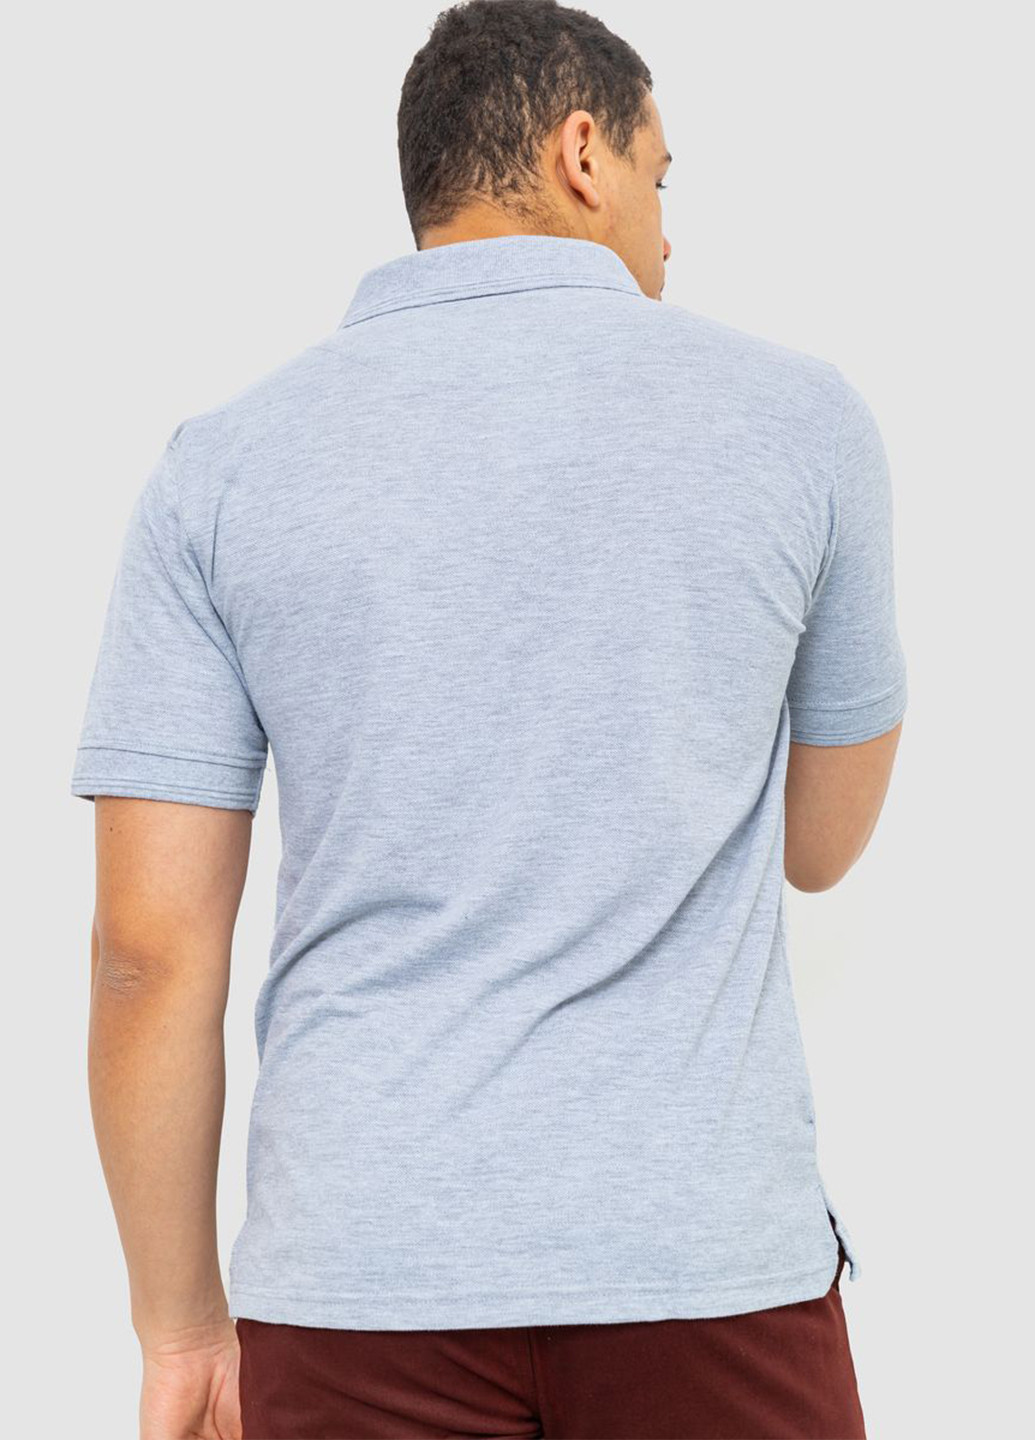 Серая футболка-поло для мужчин Ager меланжевая